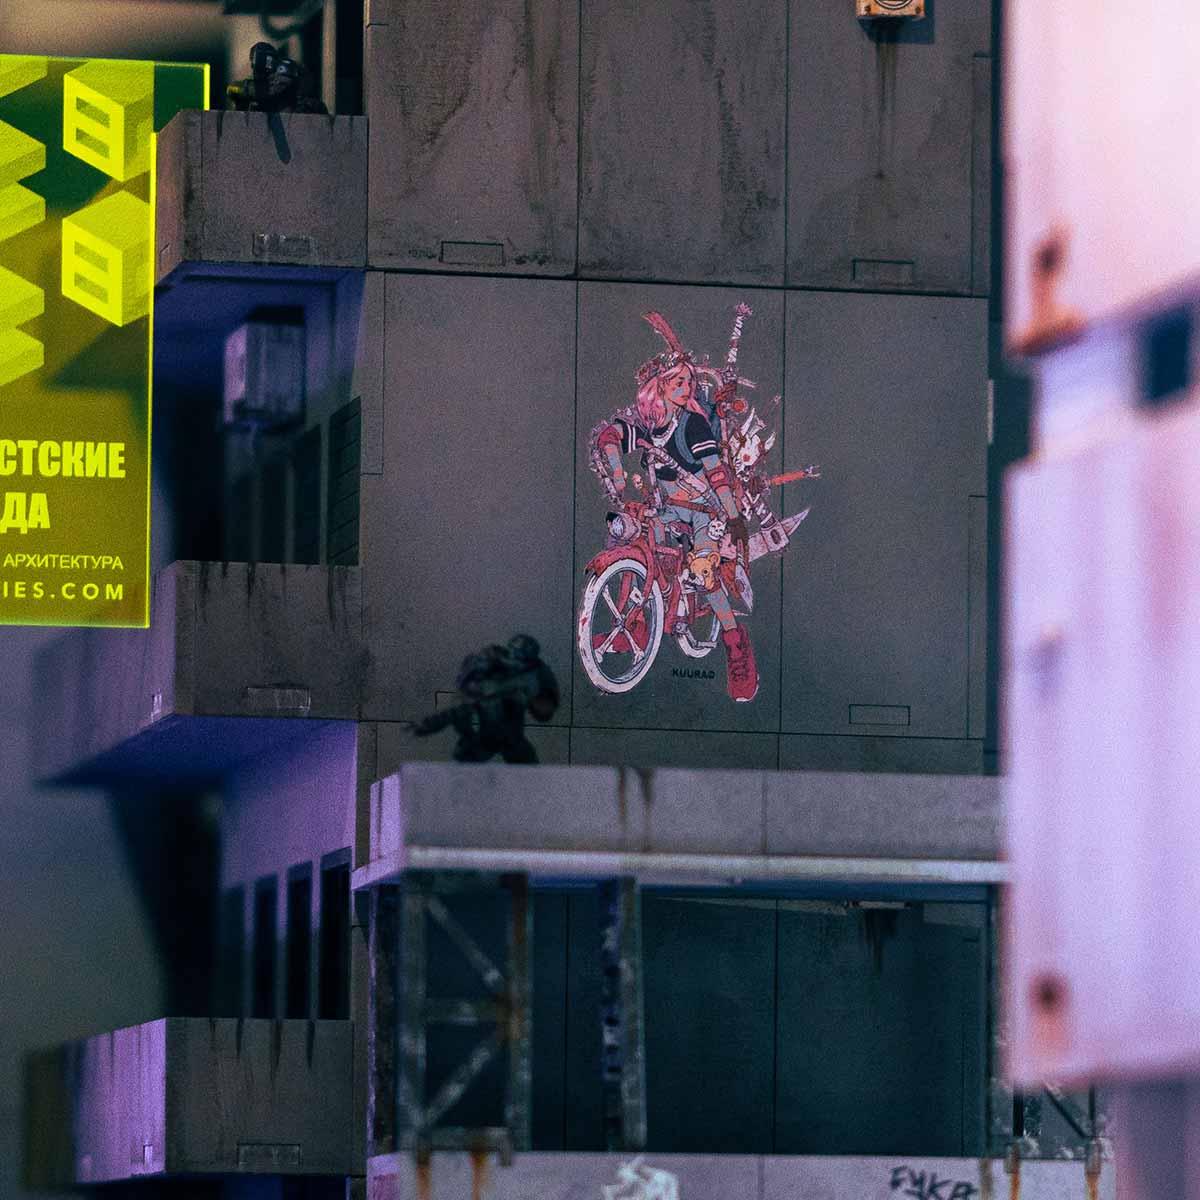 28mm terrain street scene showing cyberpunk mural graffiti